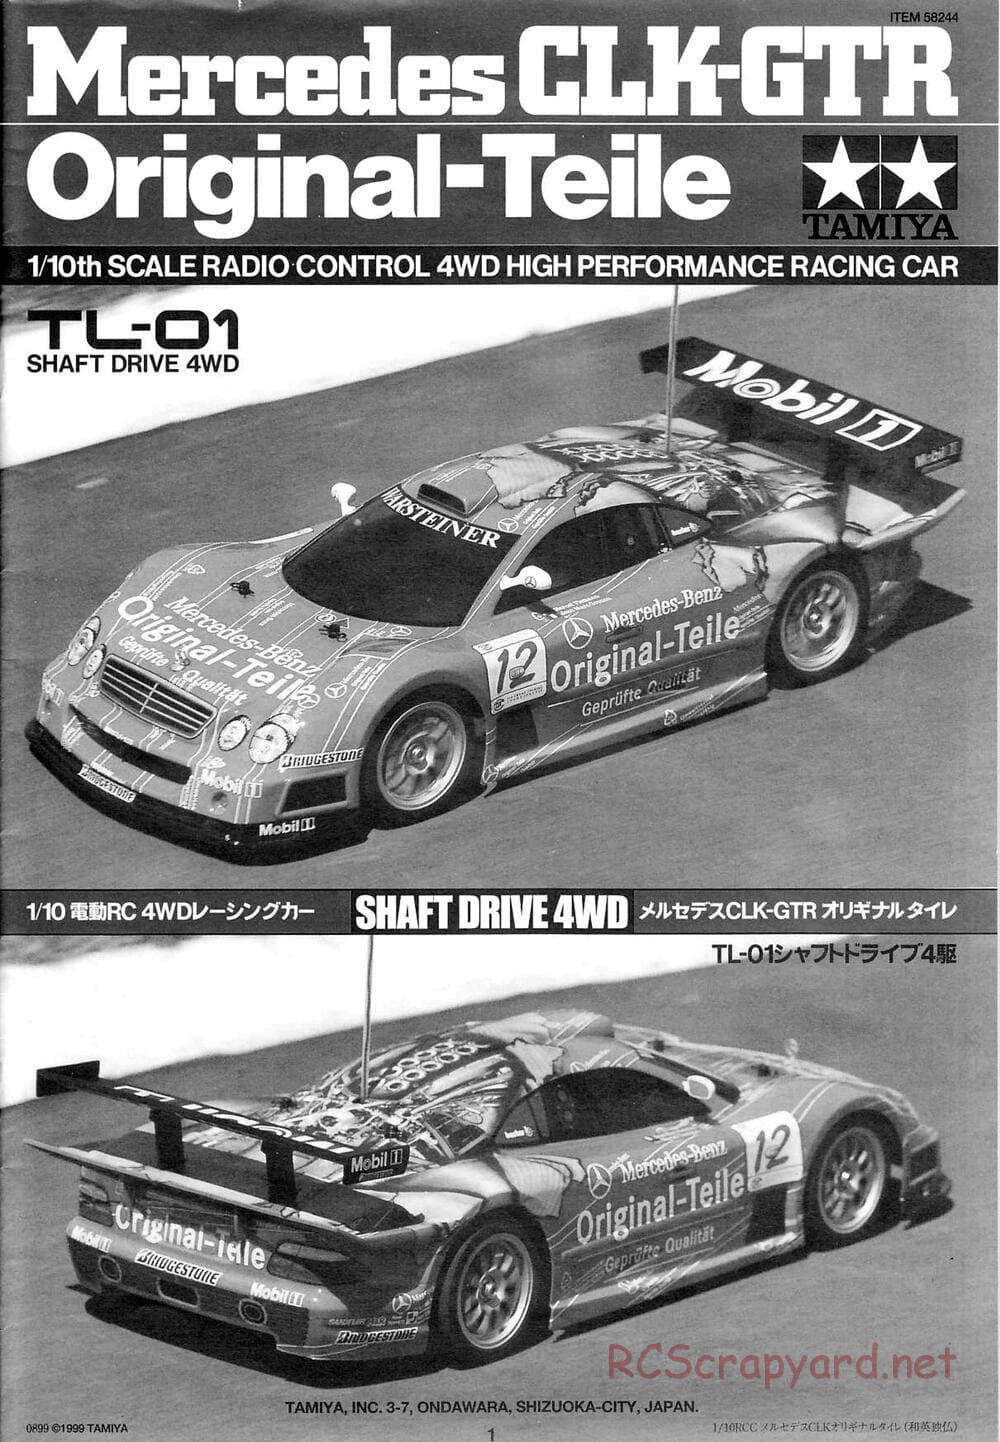 Tamiya - Mercedes CLK-GTR Original-Teile - TL-01 Chassis - Manual - Page 1